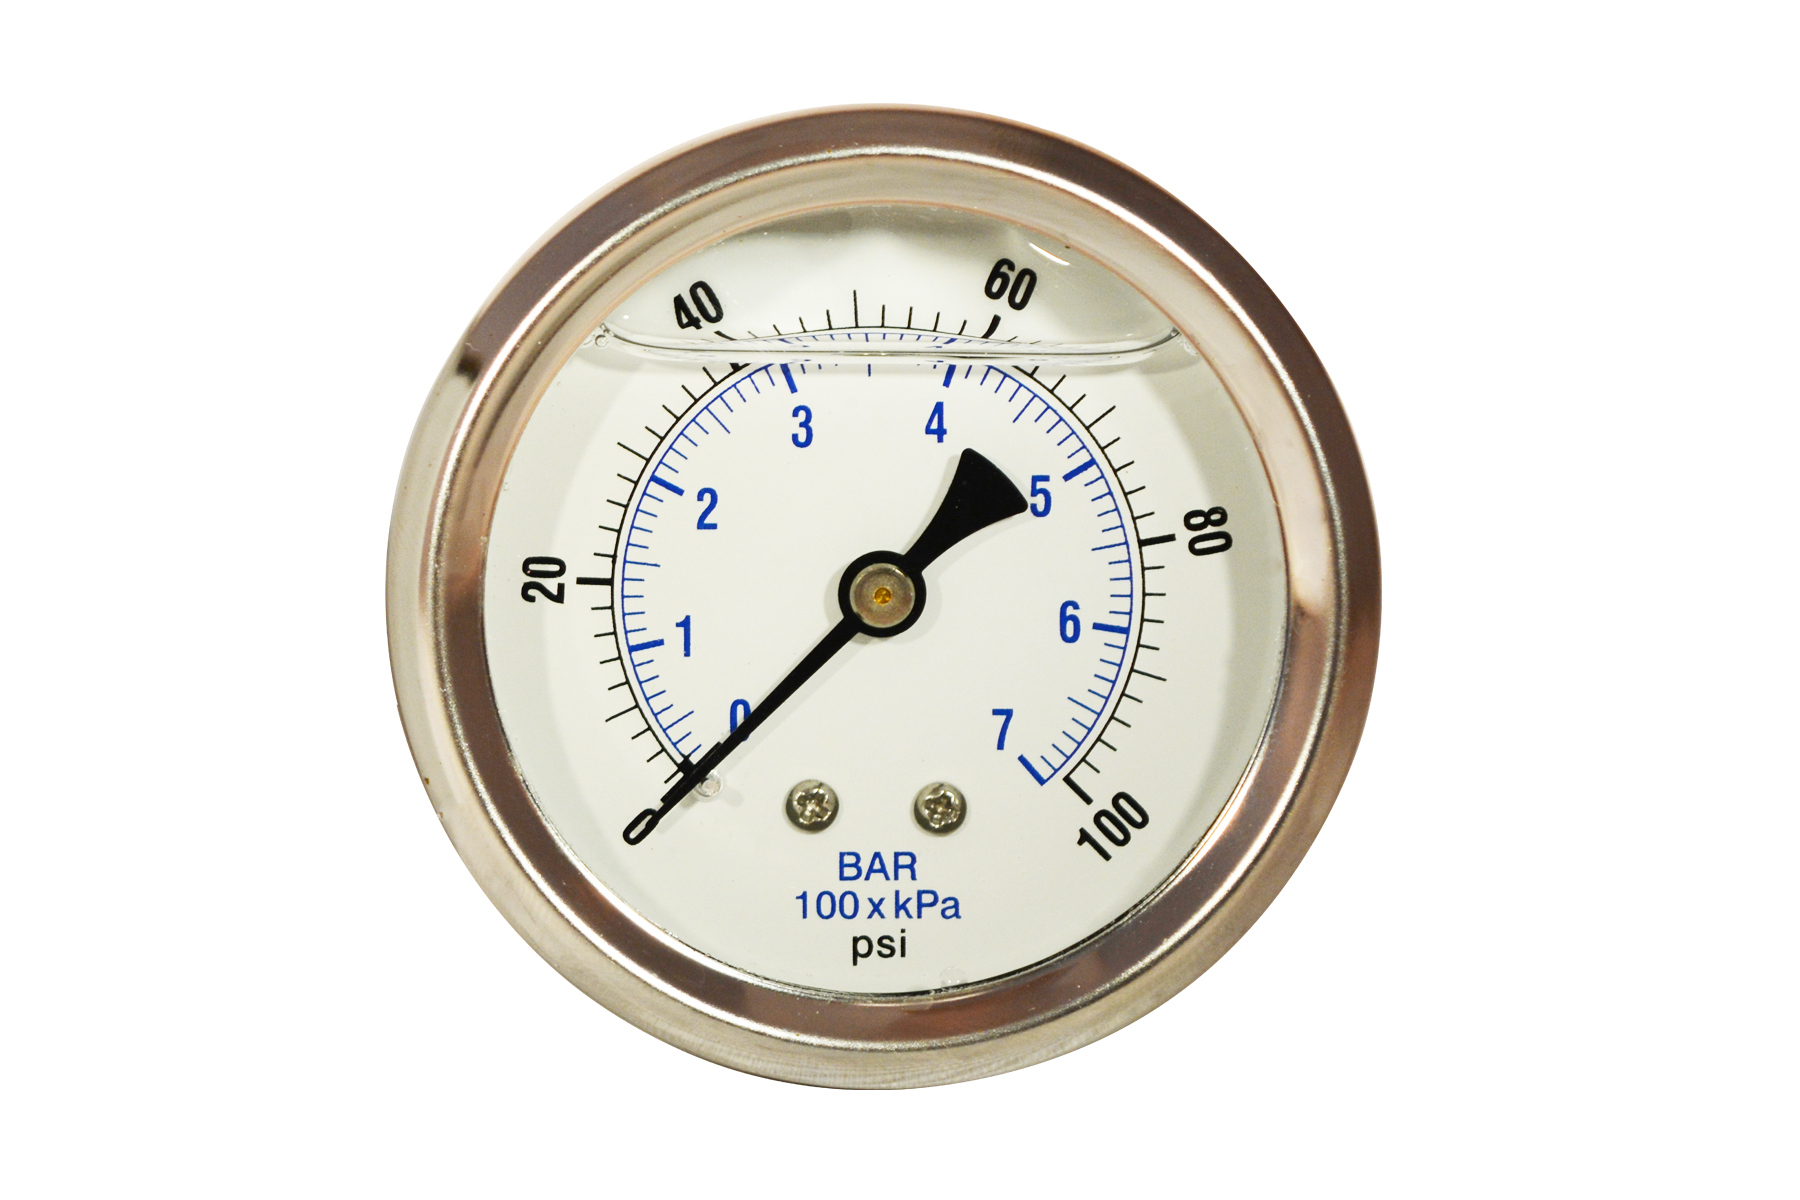 Pressure Gauge BLPG100 0-100 PSI Back Mount Liquid Glycerin Pressure Gauge